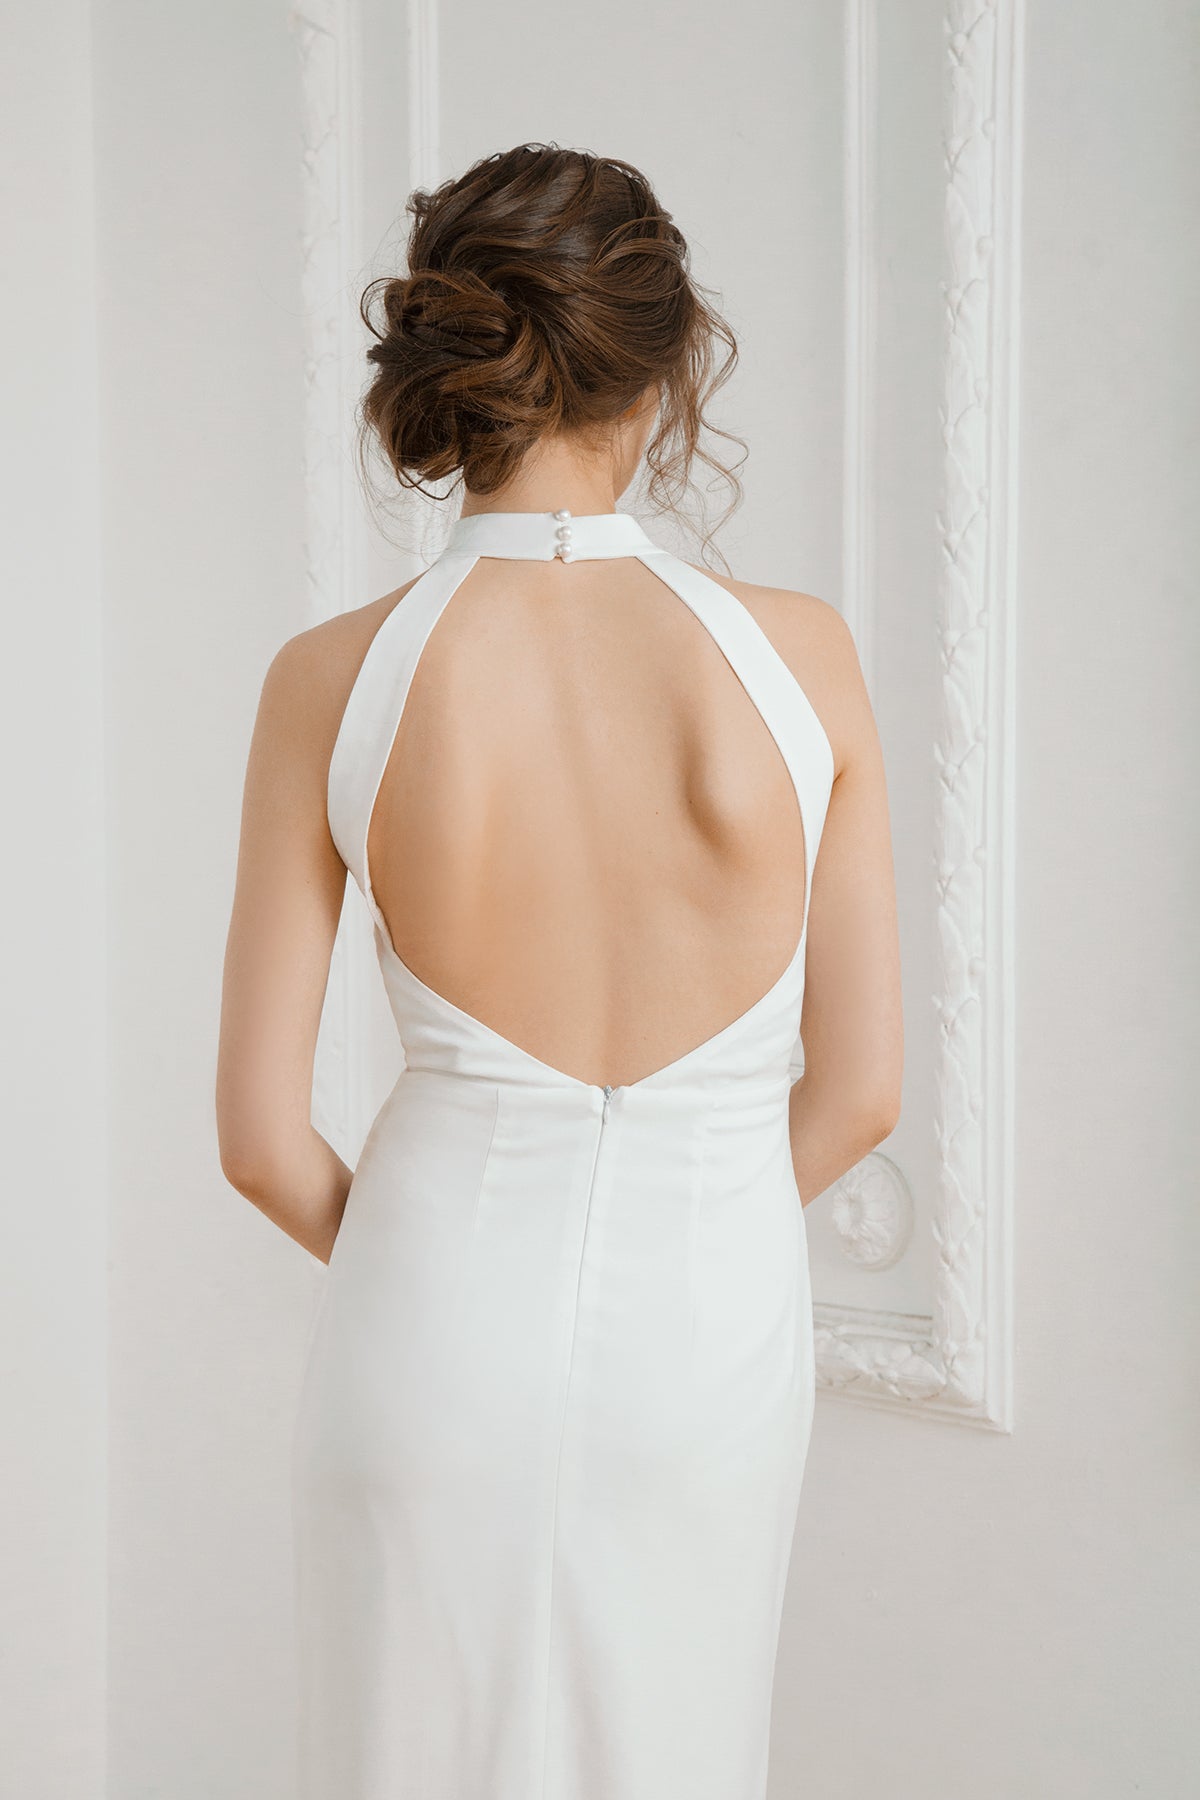 Halter Wedding Dresses Bring Sexy Backs